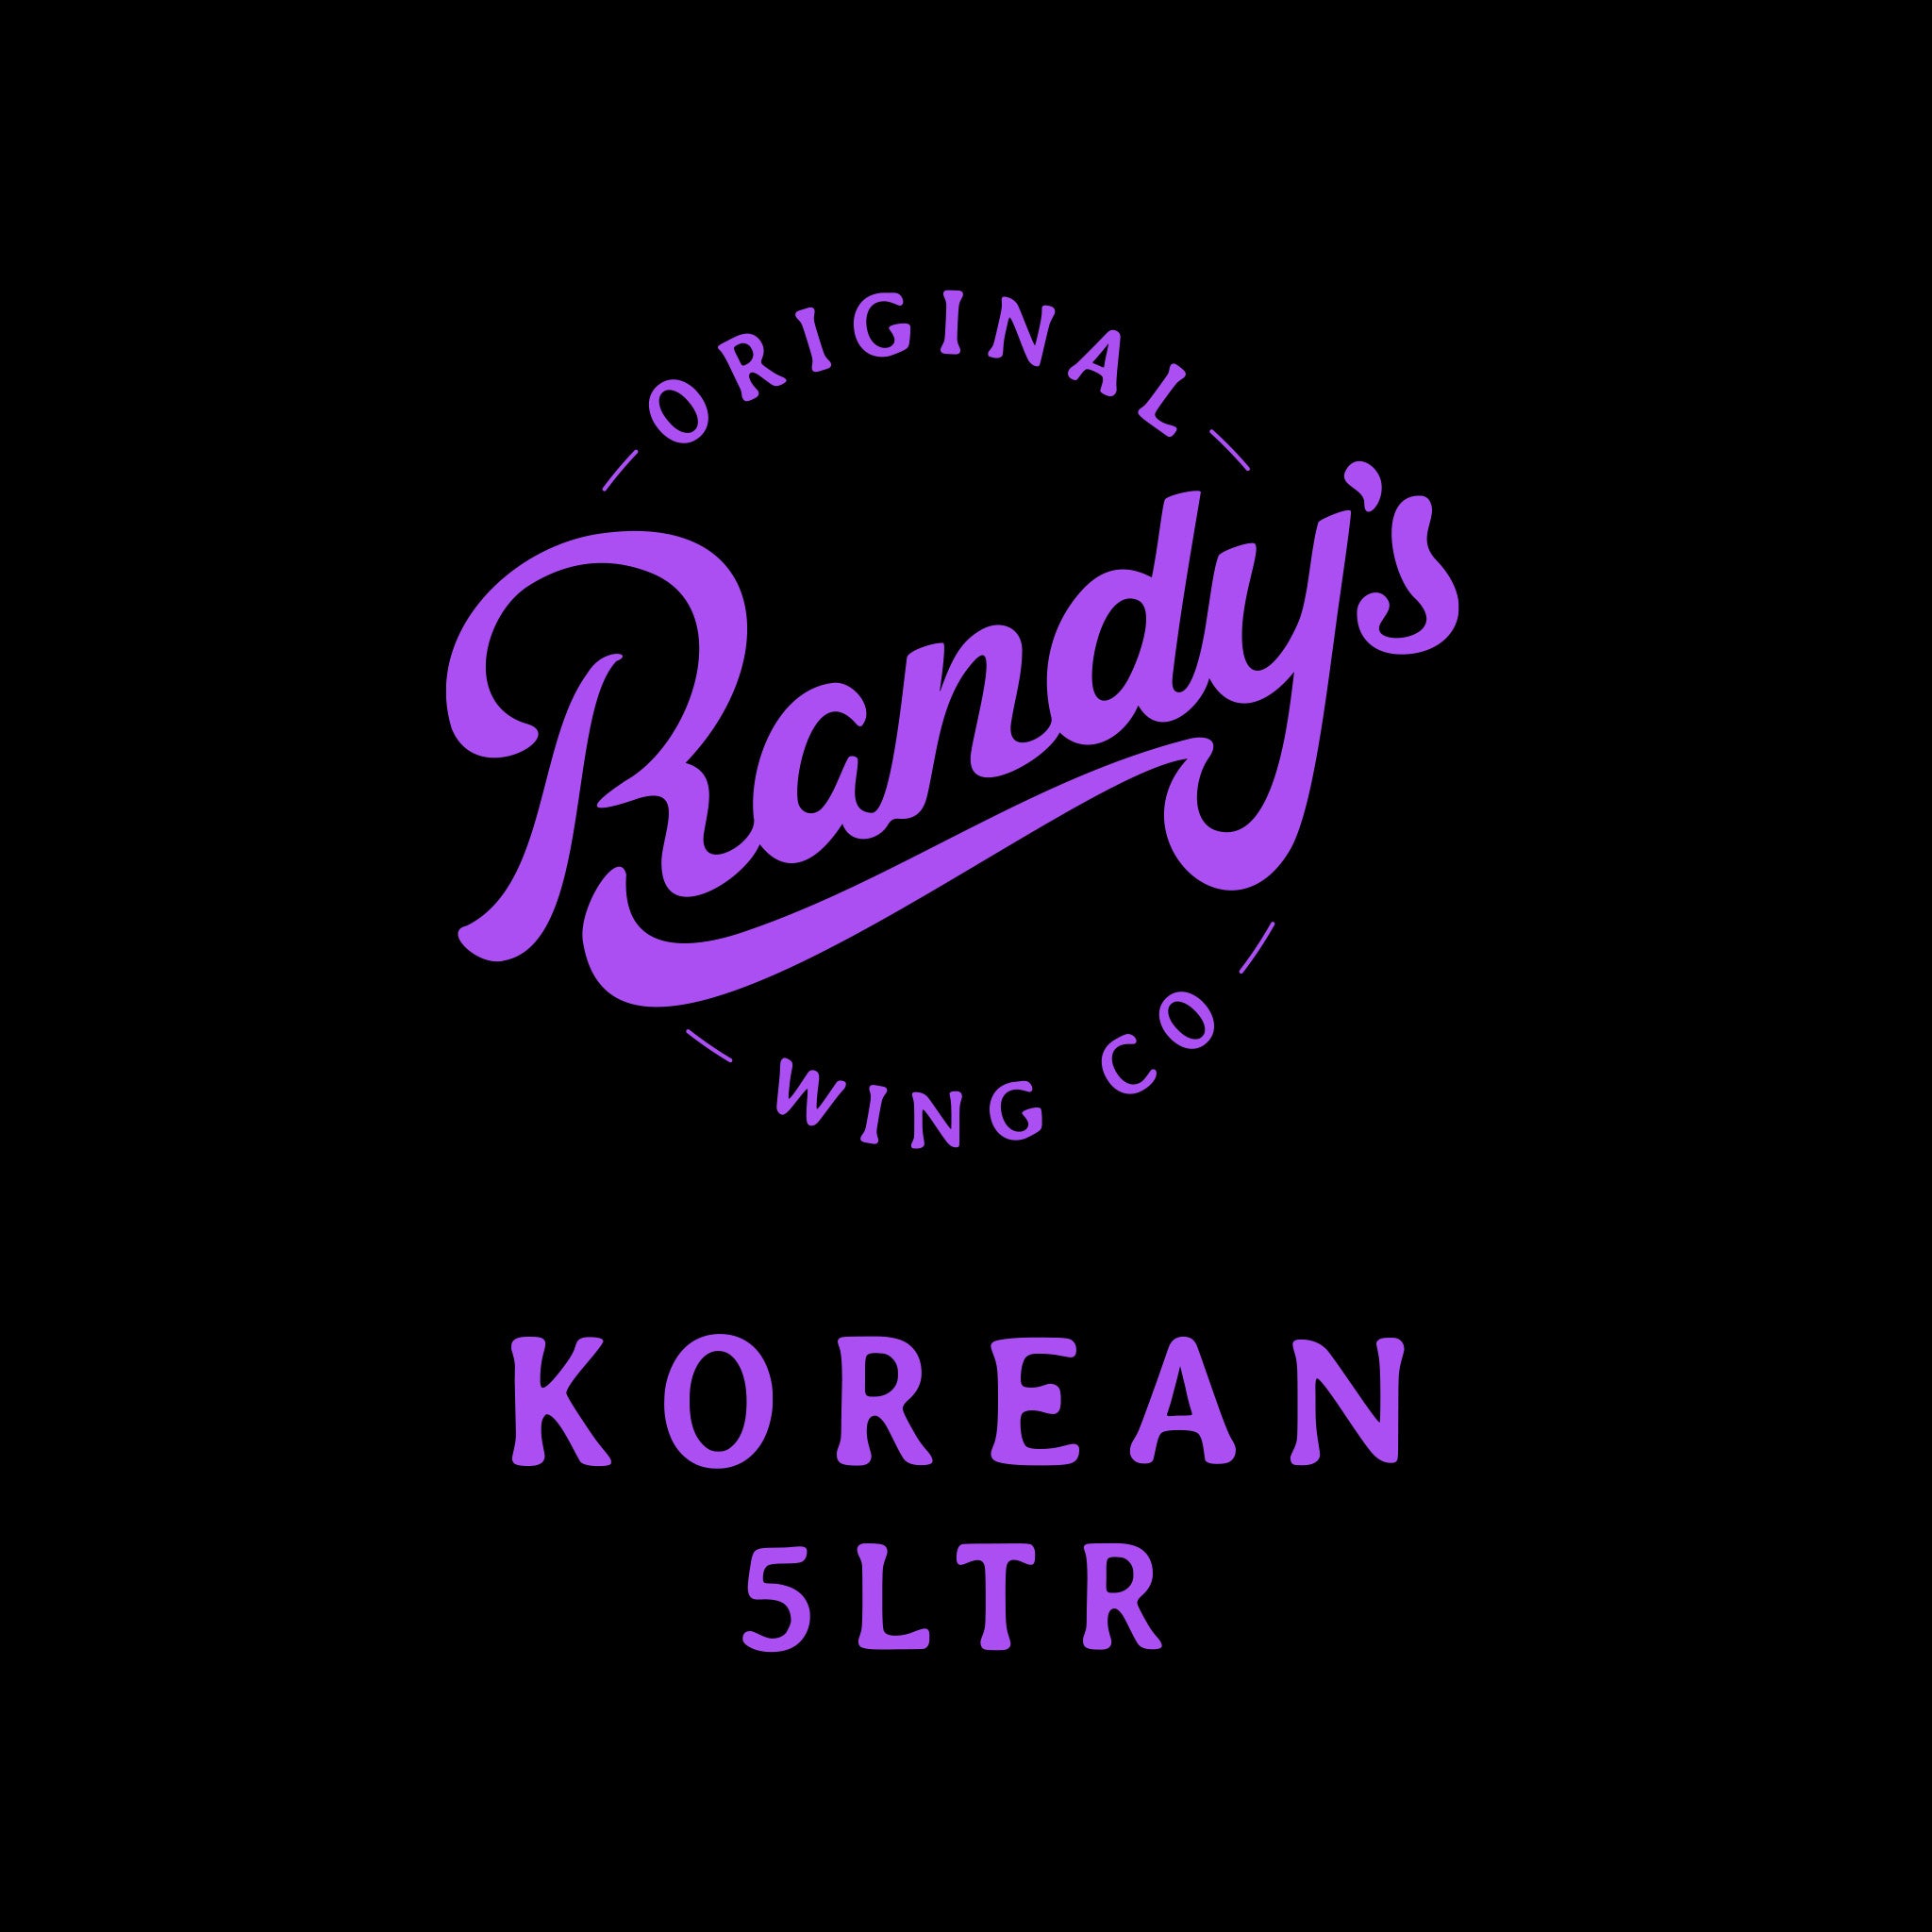 Randy's Korean - 5ltr